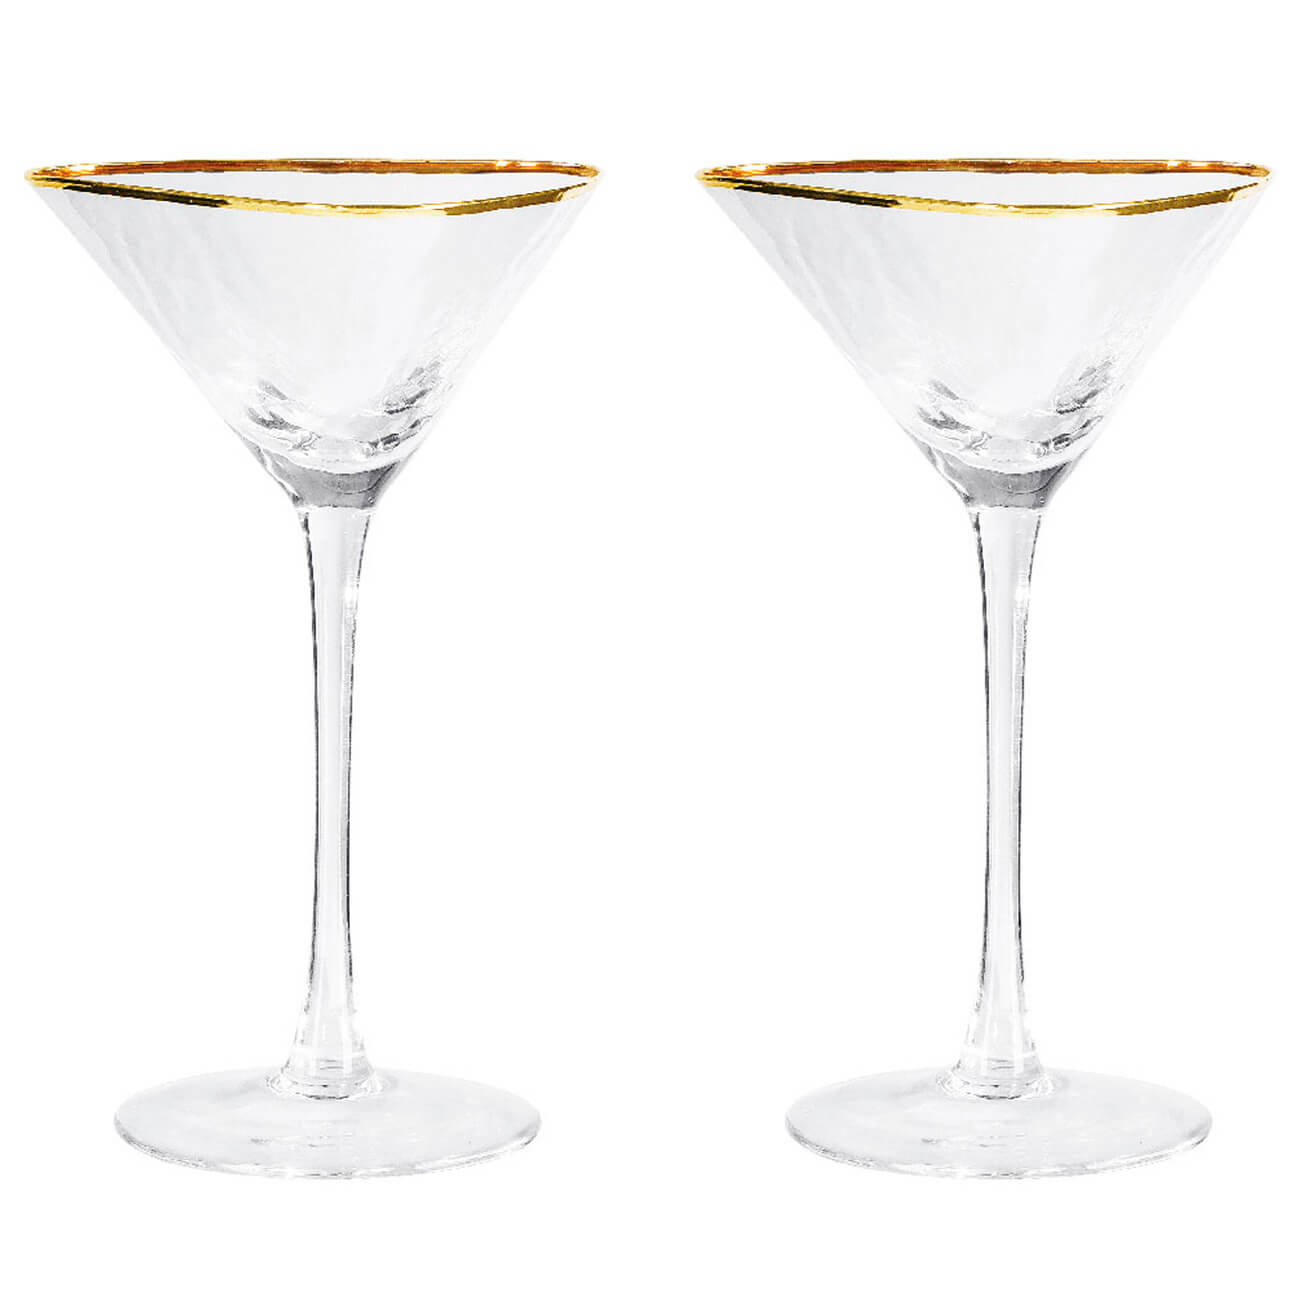 Бокал для мартини, 150 мл, 2 шт, стекло, золотистый кант, Triangle Gold критика чистого разума кант и